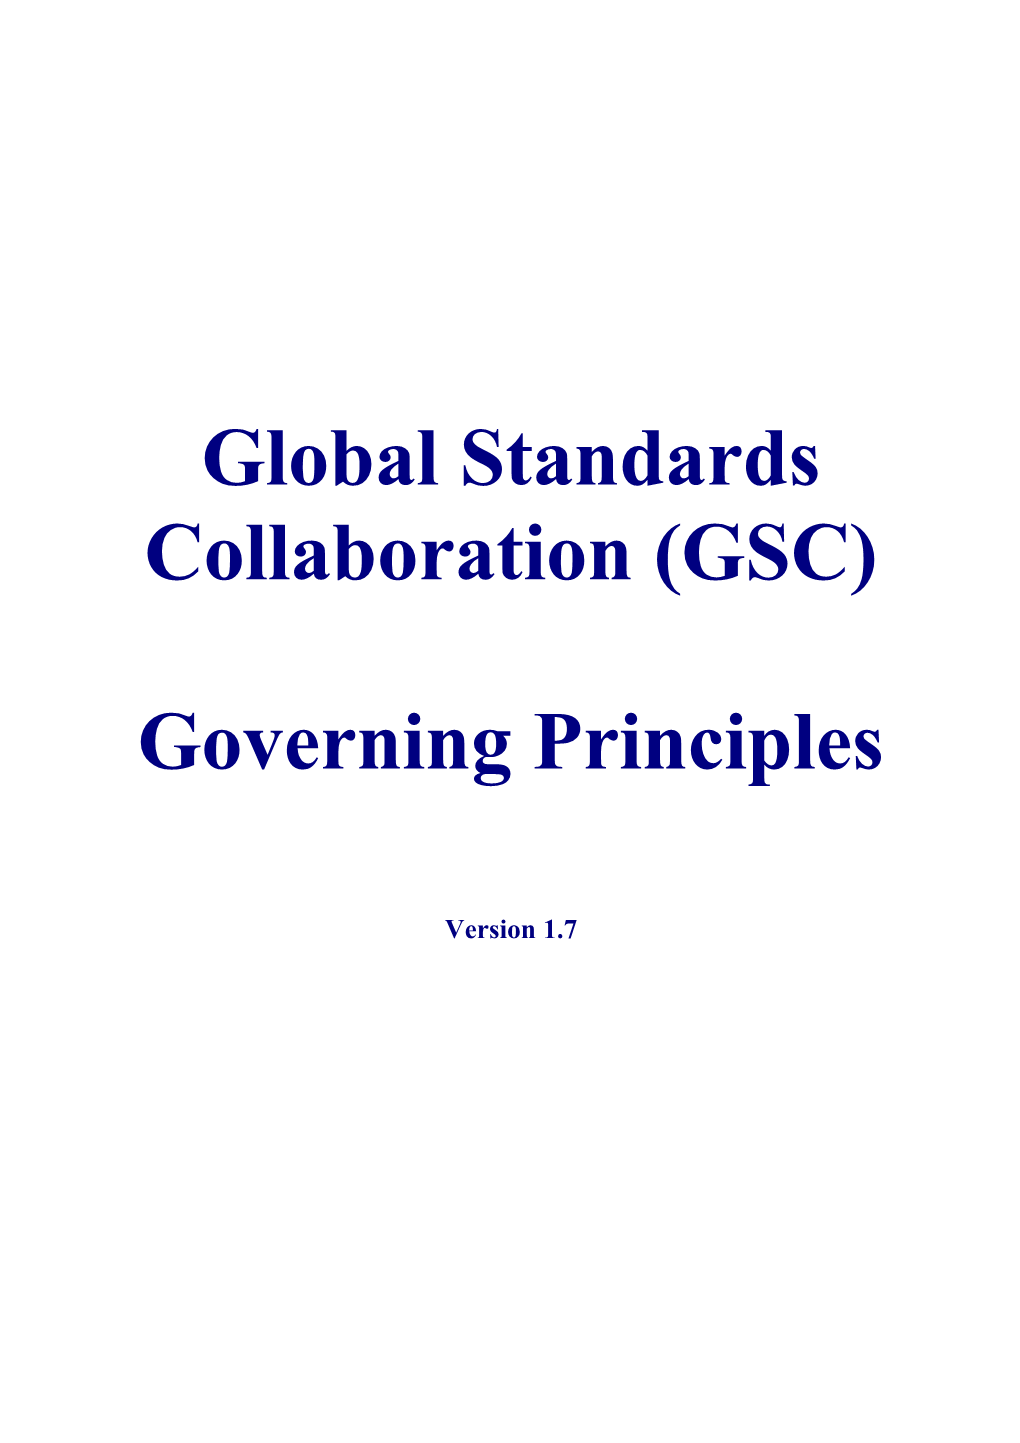 Global Standards Collaboration - Governing Principles